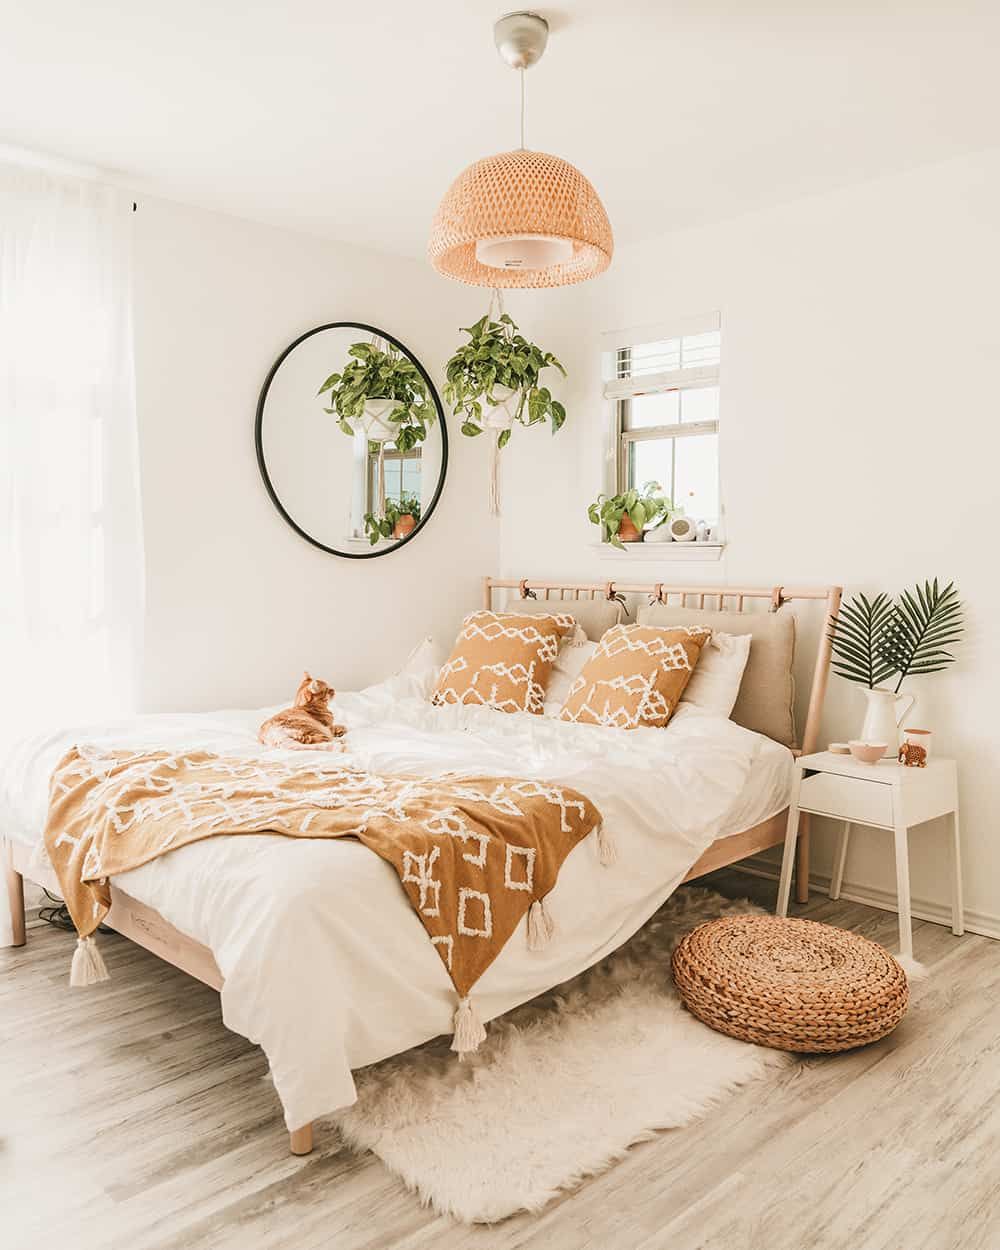 13 Boho Bedroom Ideas - Decorating a Bohemian Bedroom on a Budget